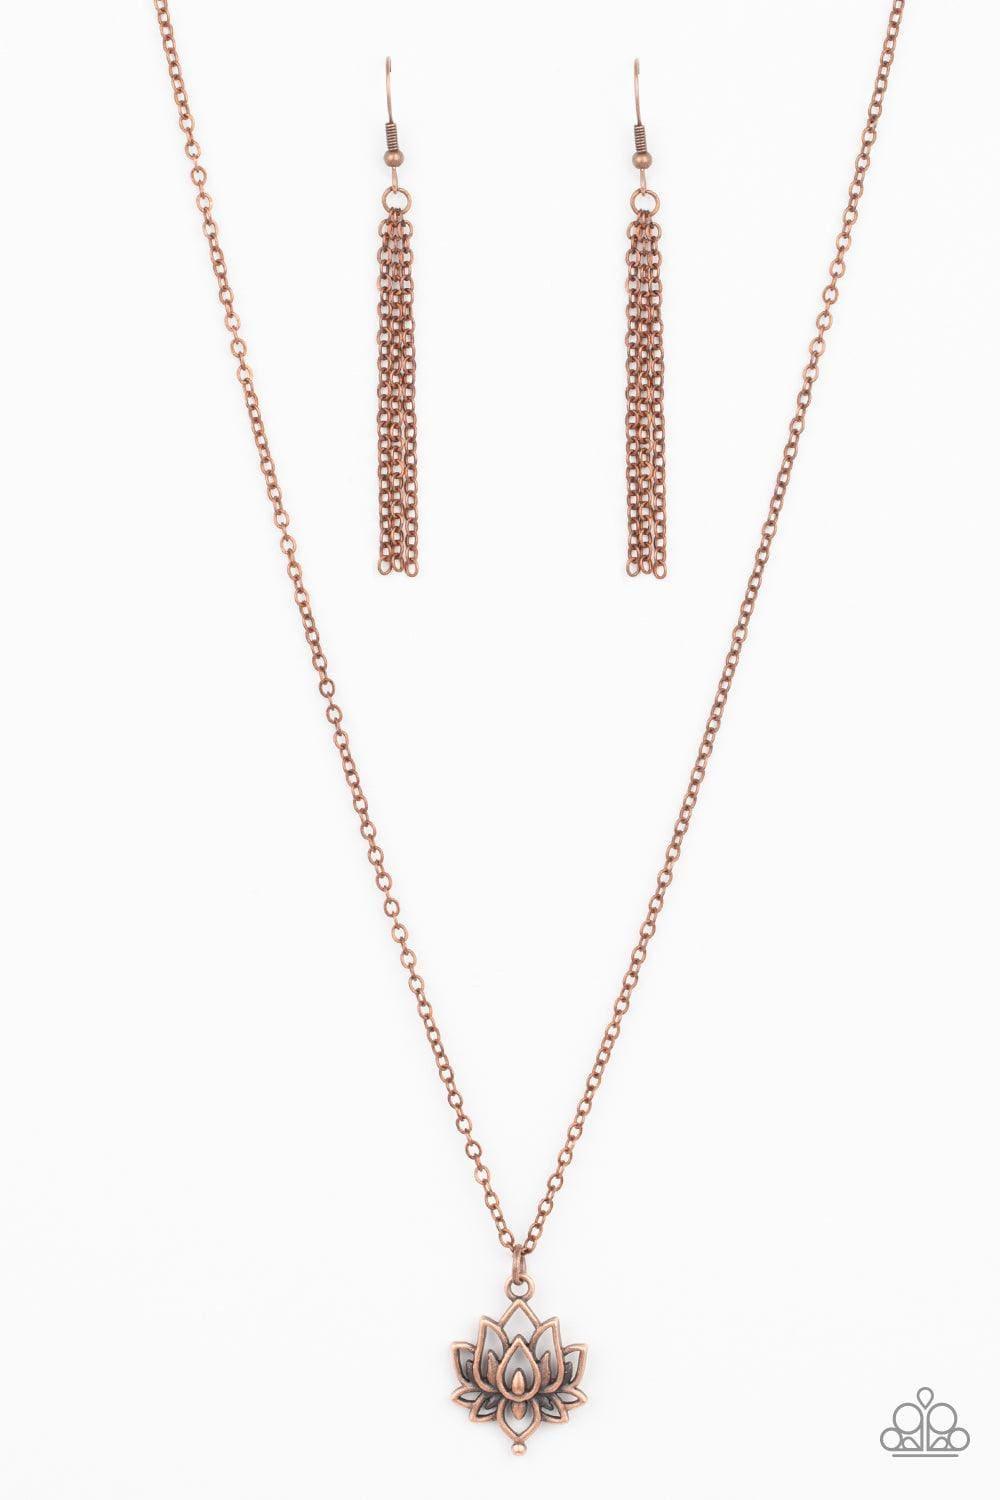 Paparazzi Accessories - Lotus Retreat - Copper Necklace - Bling by JessieK